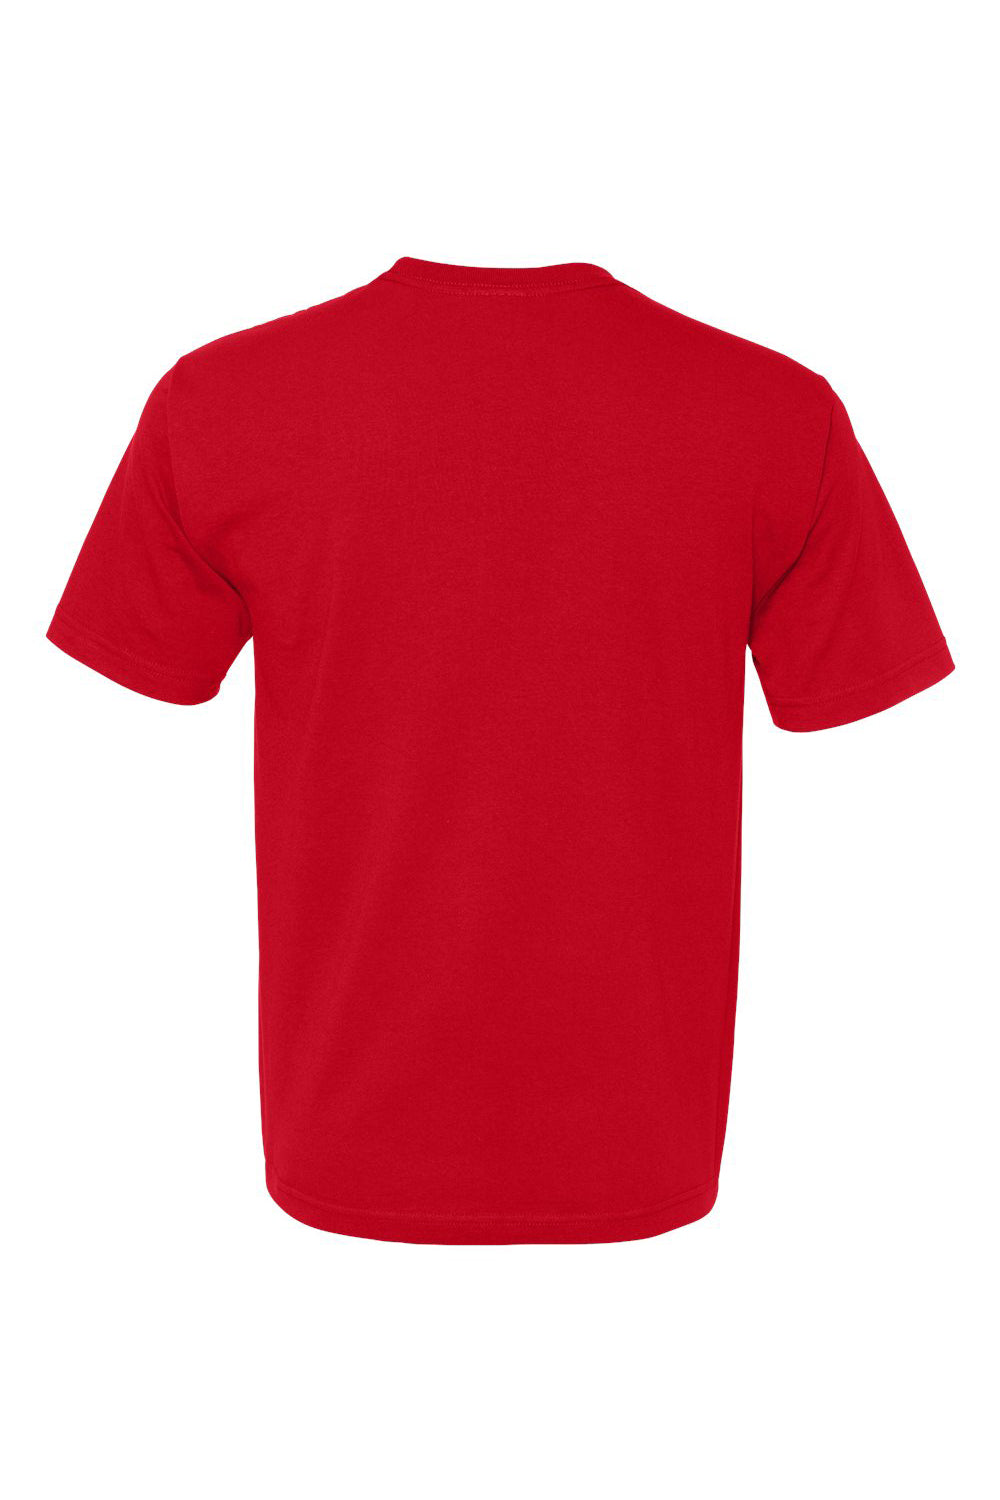 Bayside BA5040 Mens USA Made Short Sleeve Crewneck T-Shirt Red Flat Back